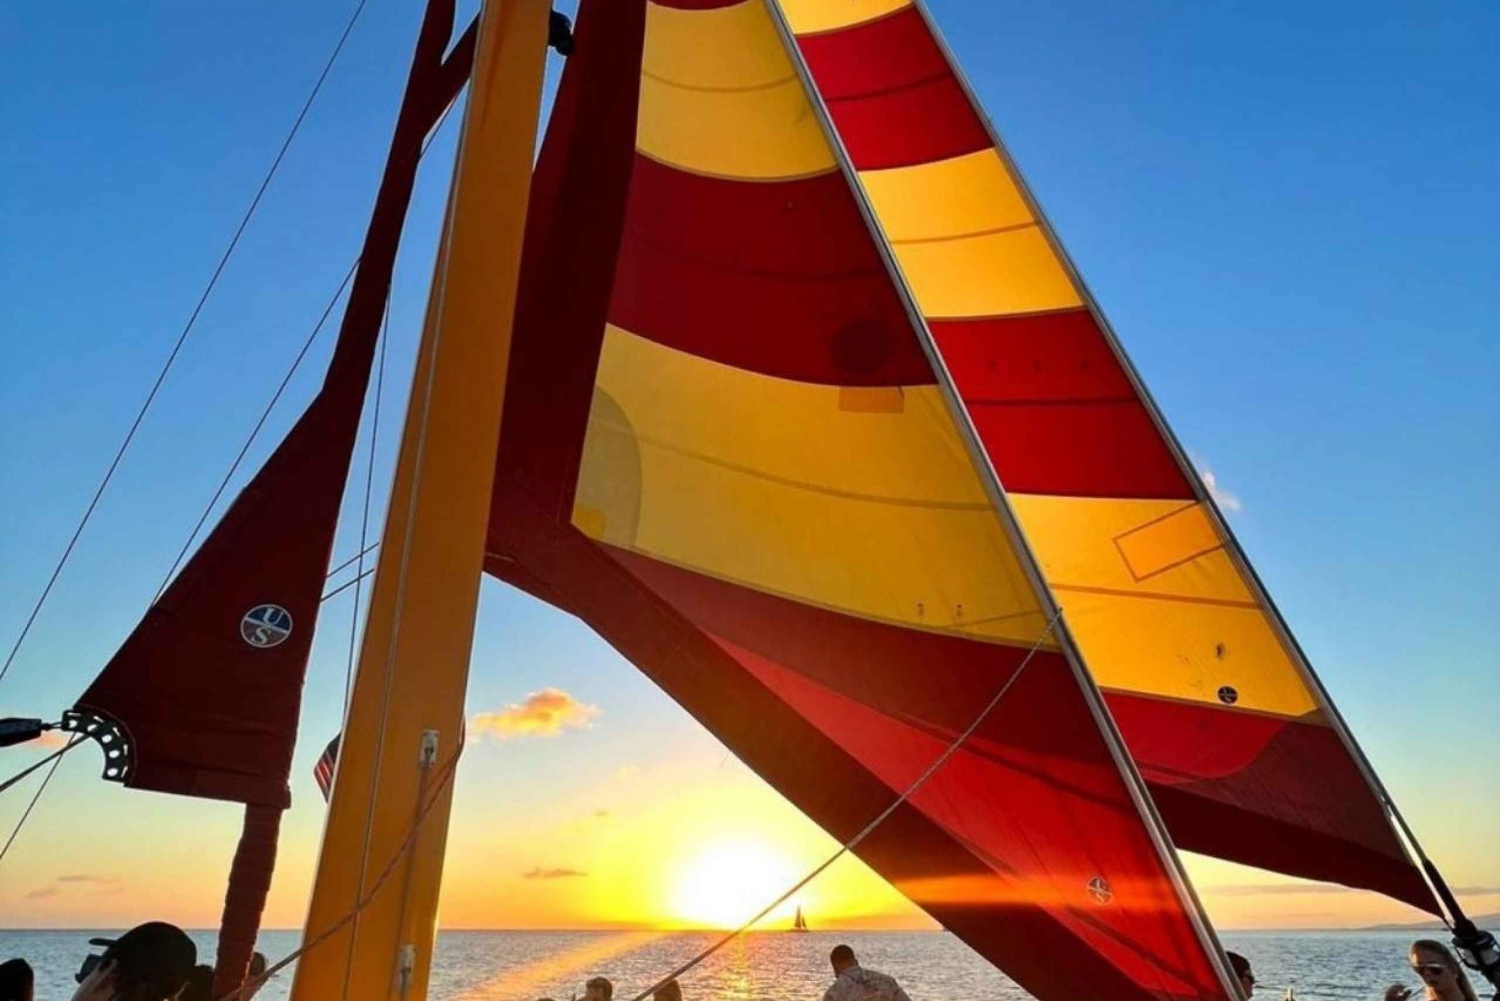 Honolulu: Auringonlaskun purjehduskokemus